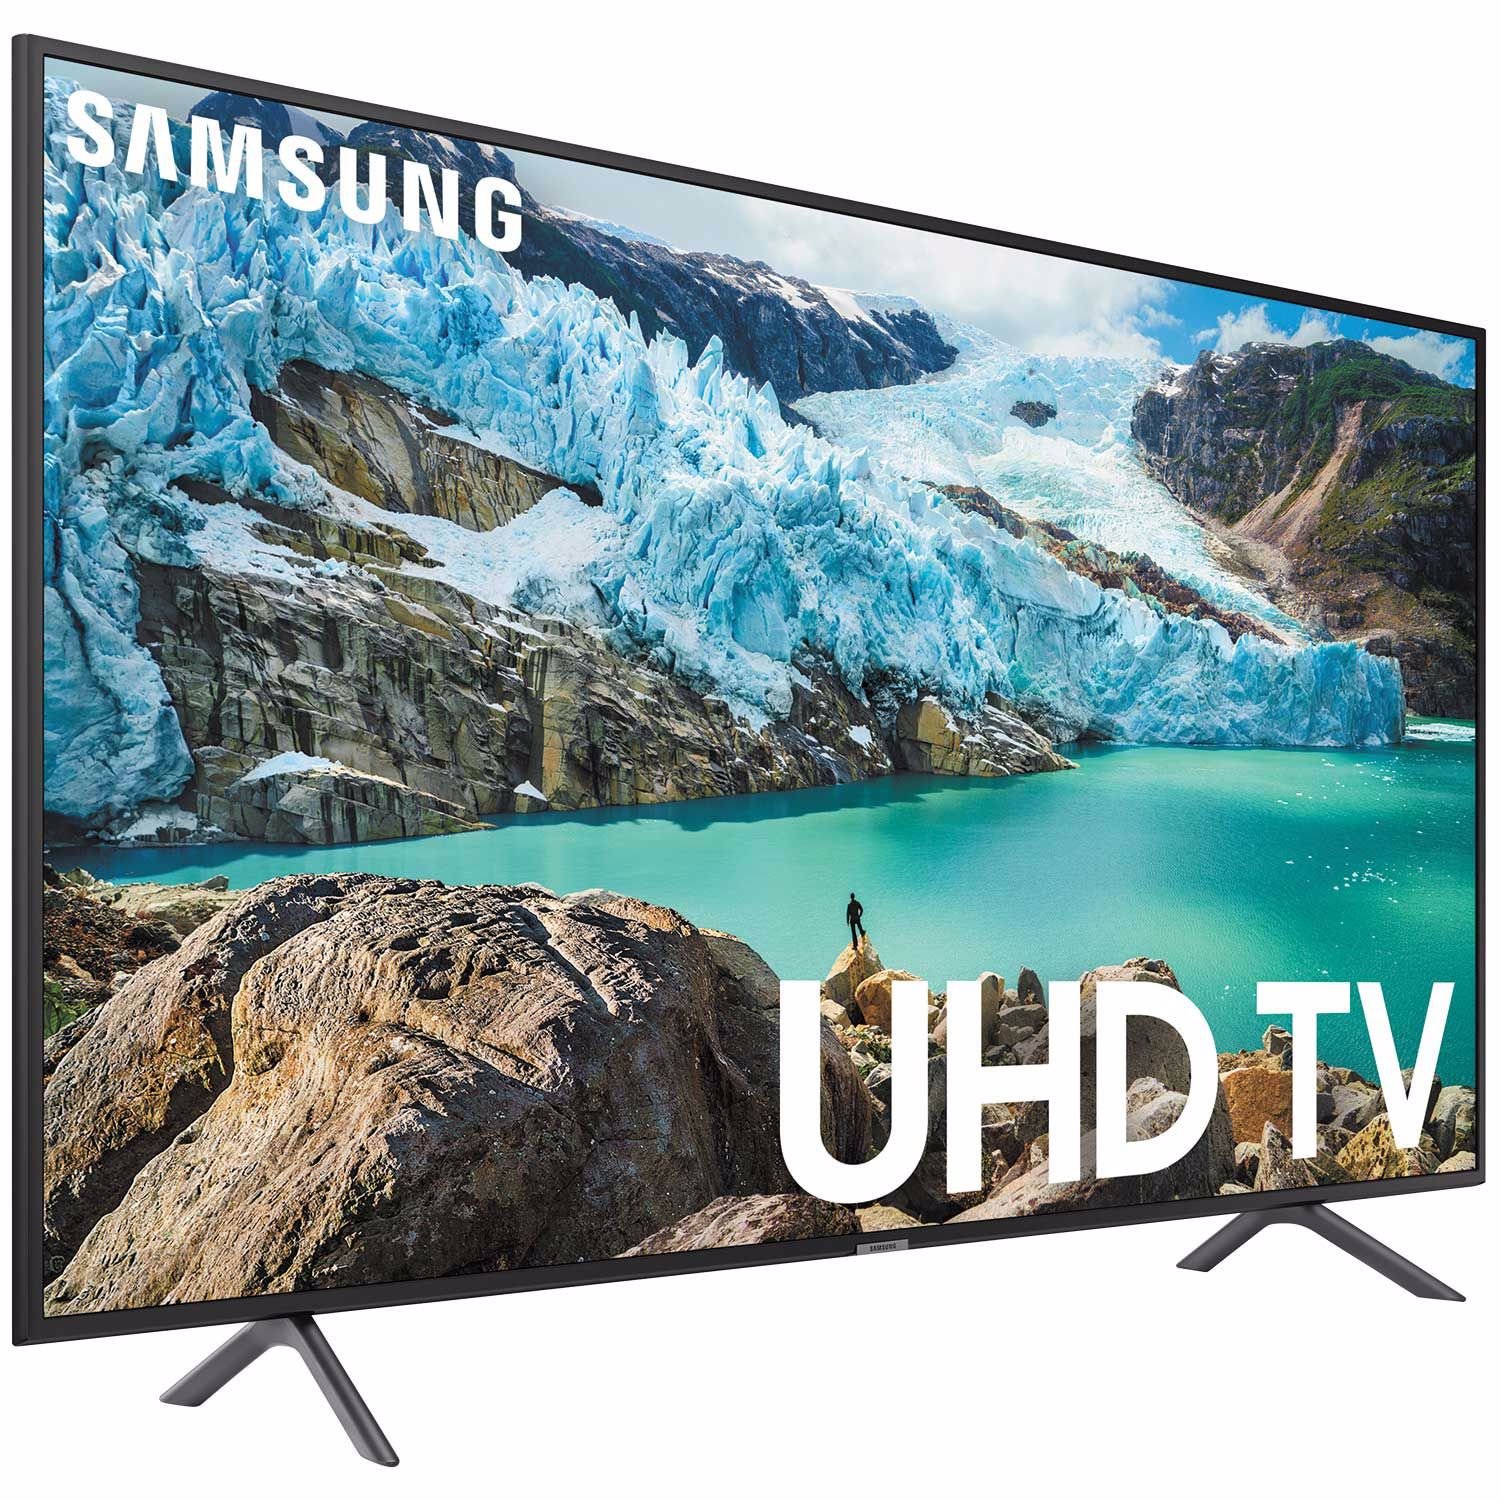 Samsung 55 Inch Class 4k Ultra Hd 2160p Smart Led Tv Un55ru7100 Samsung Electronics